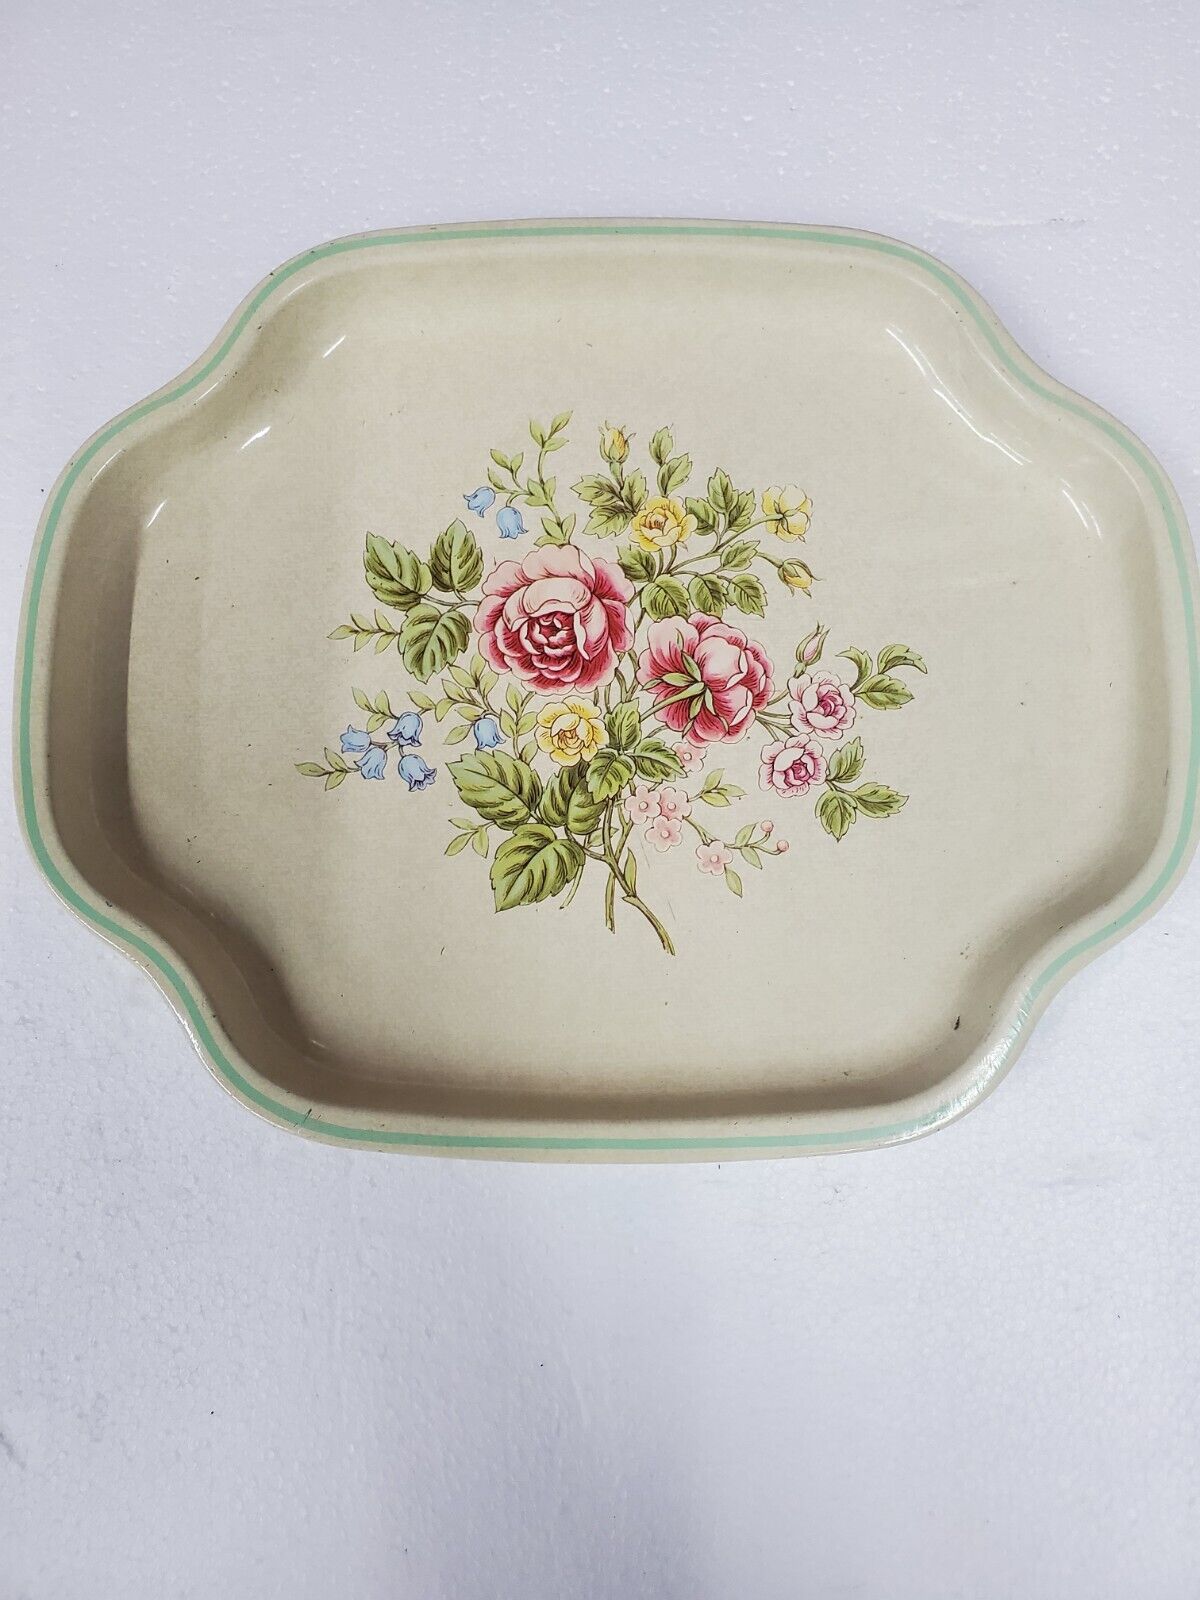 Vintage Avon Serving Tray Metal Antique Plate Floral Pattern